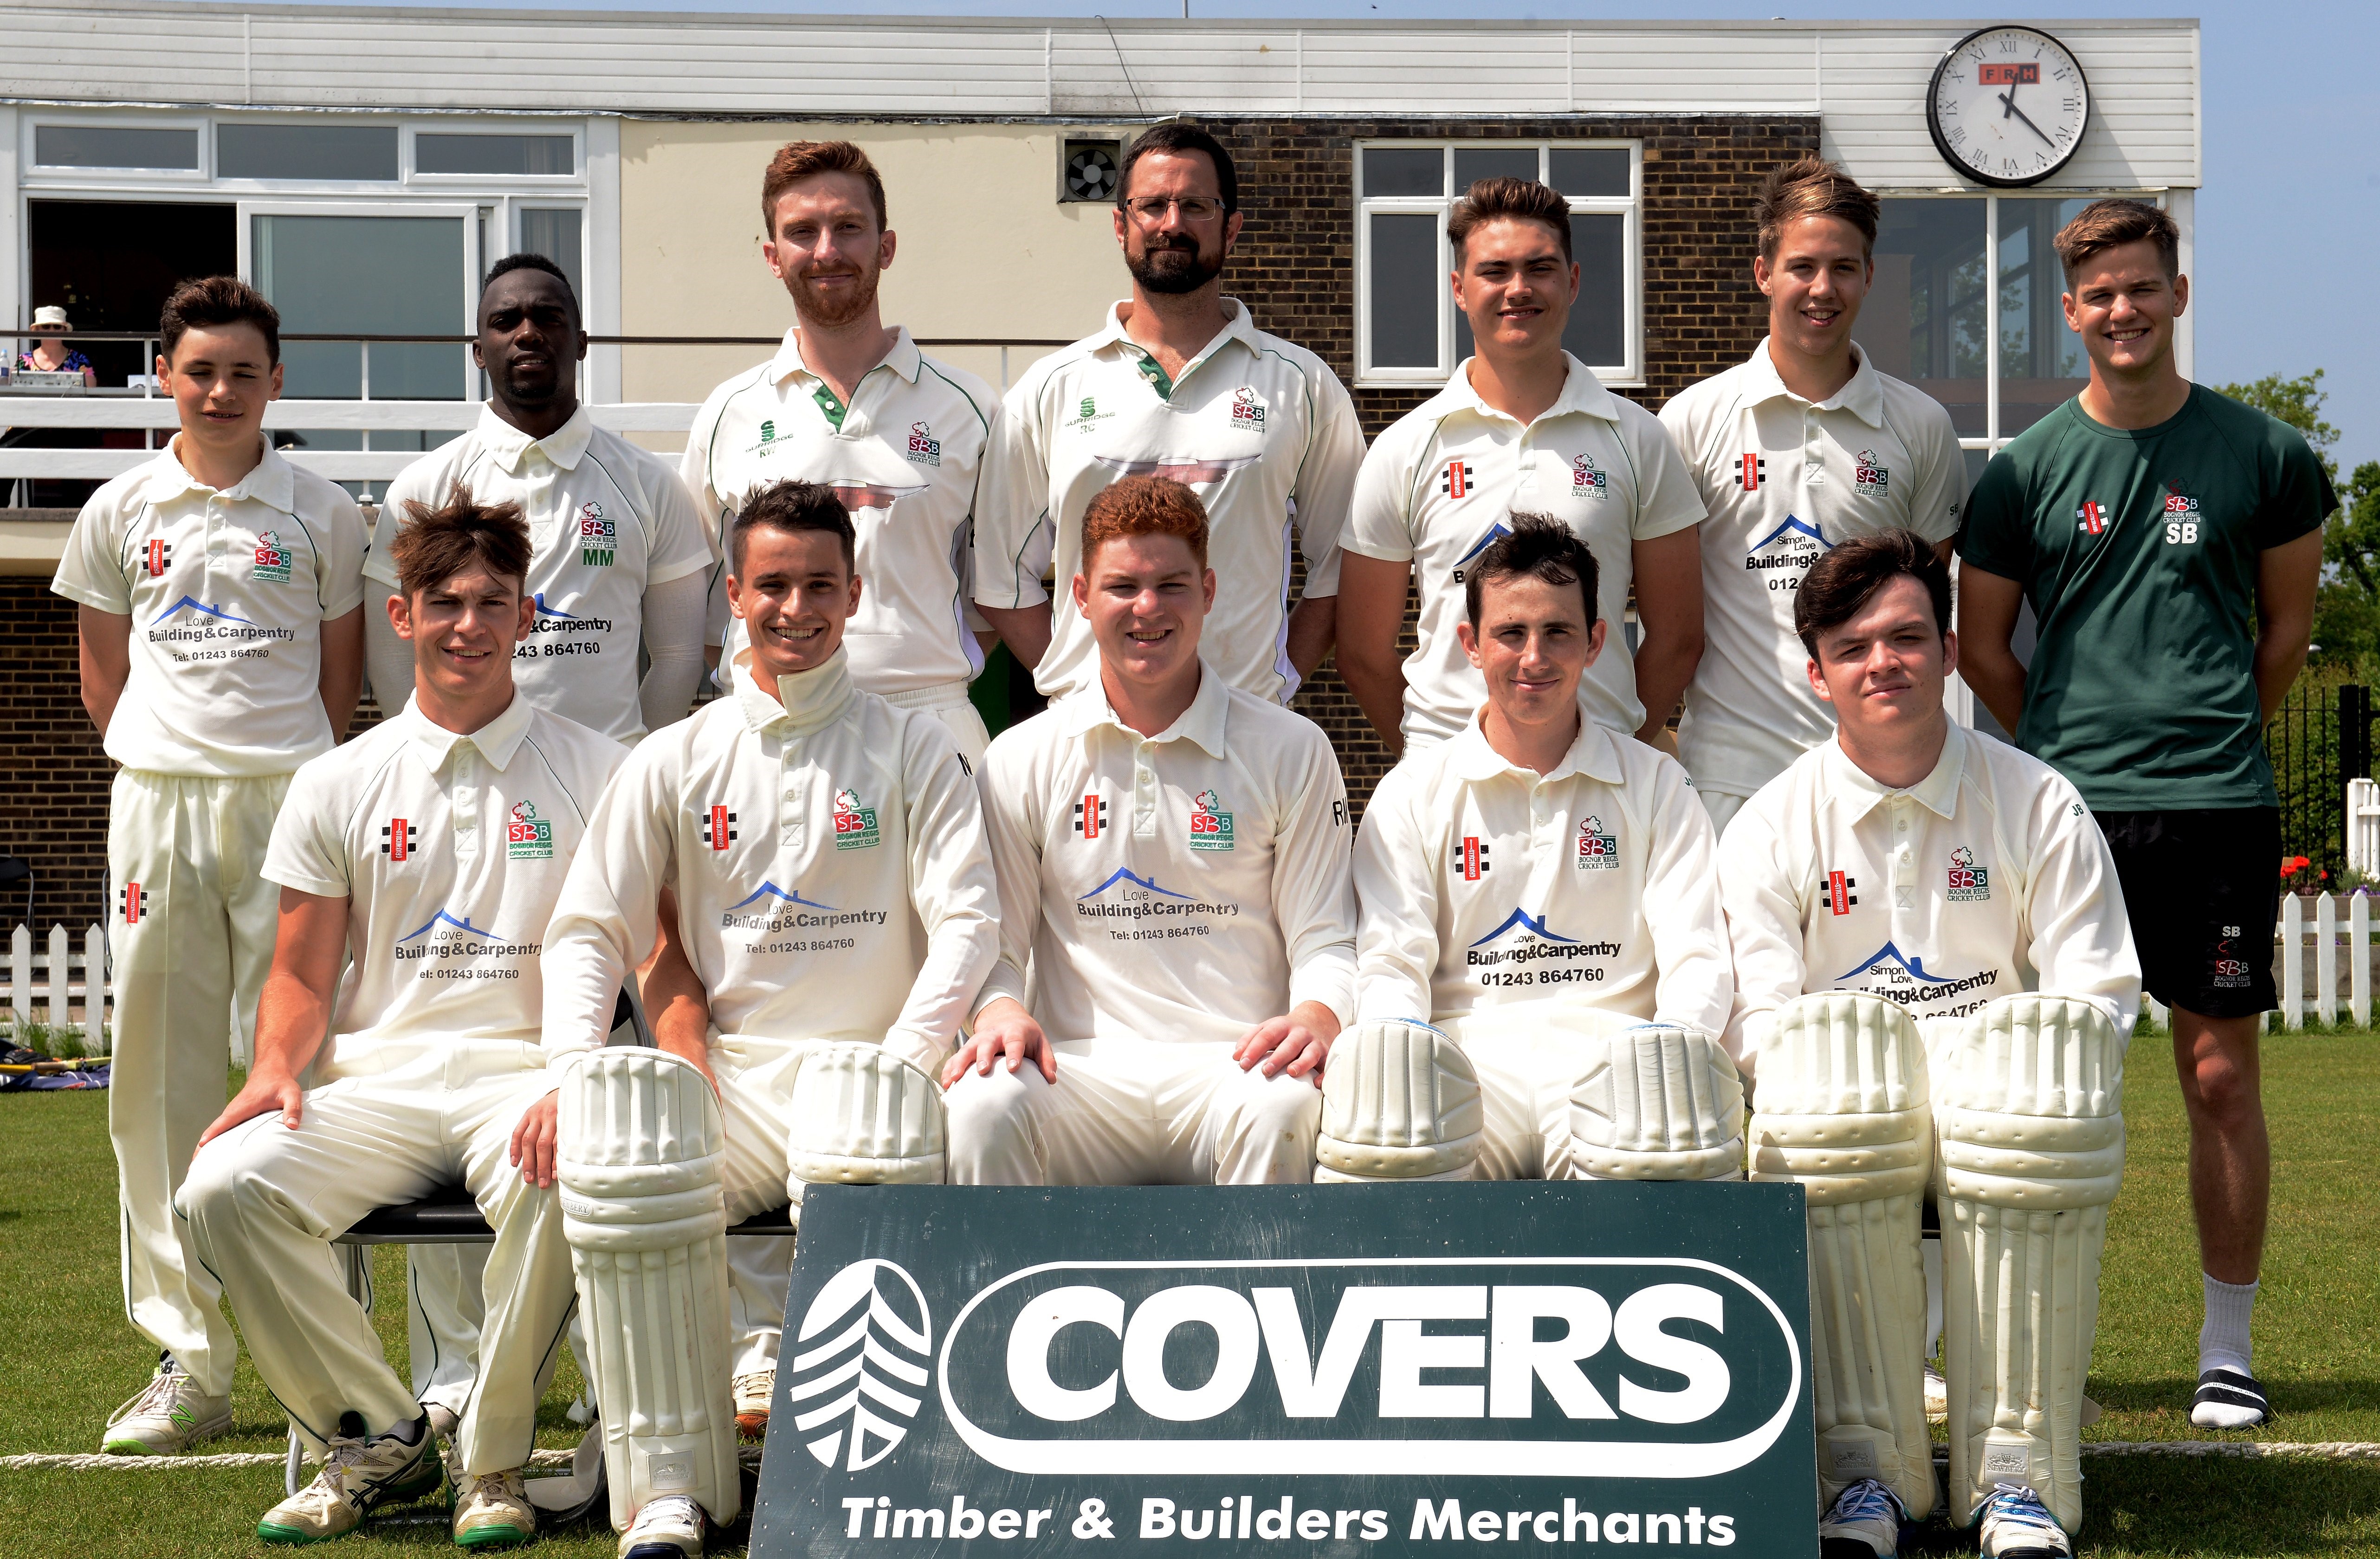 Covers renews sponsorship of Bognor Regis Cricket Club